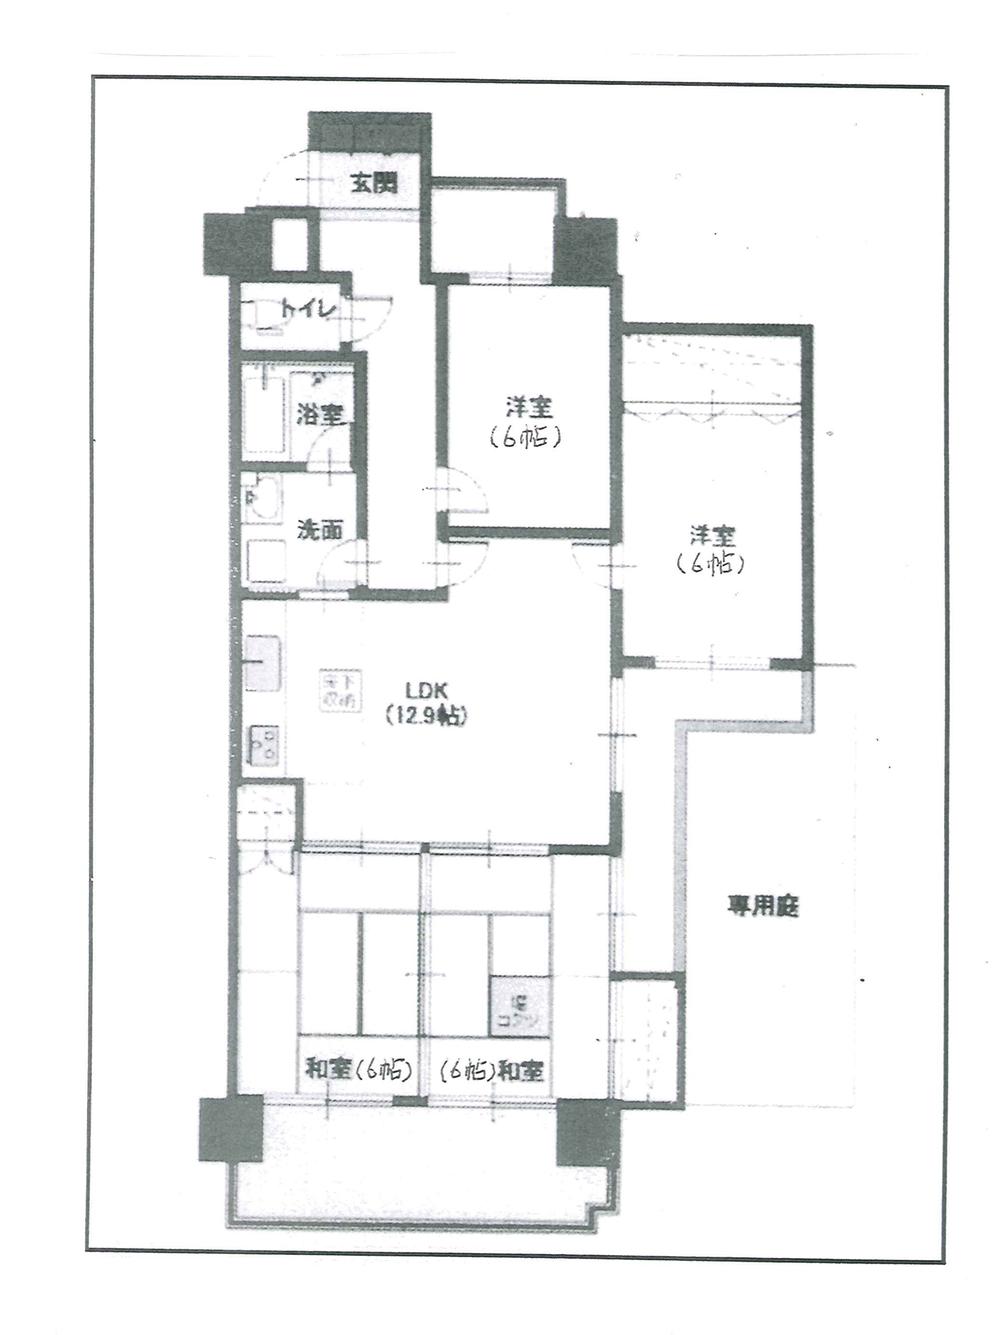 Floor plan. 4LDK, Price 12.8 million yen, Occupied area 81.55 sq m , Balcony area 16.06 sq m